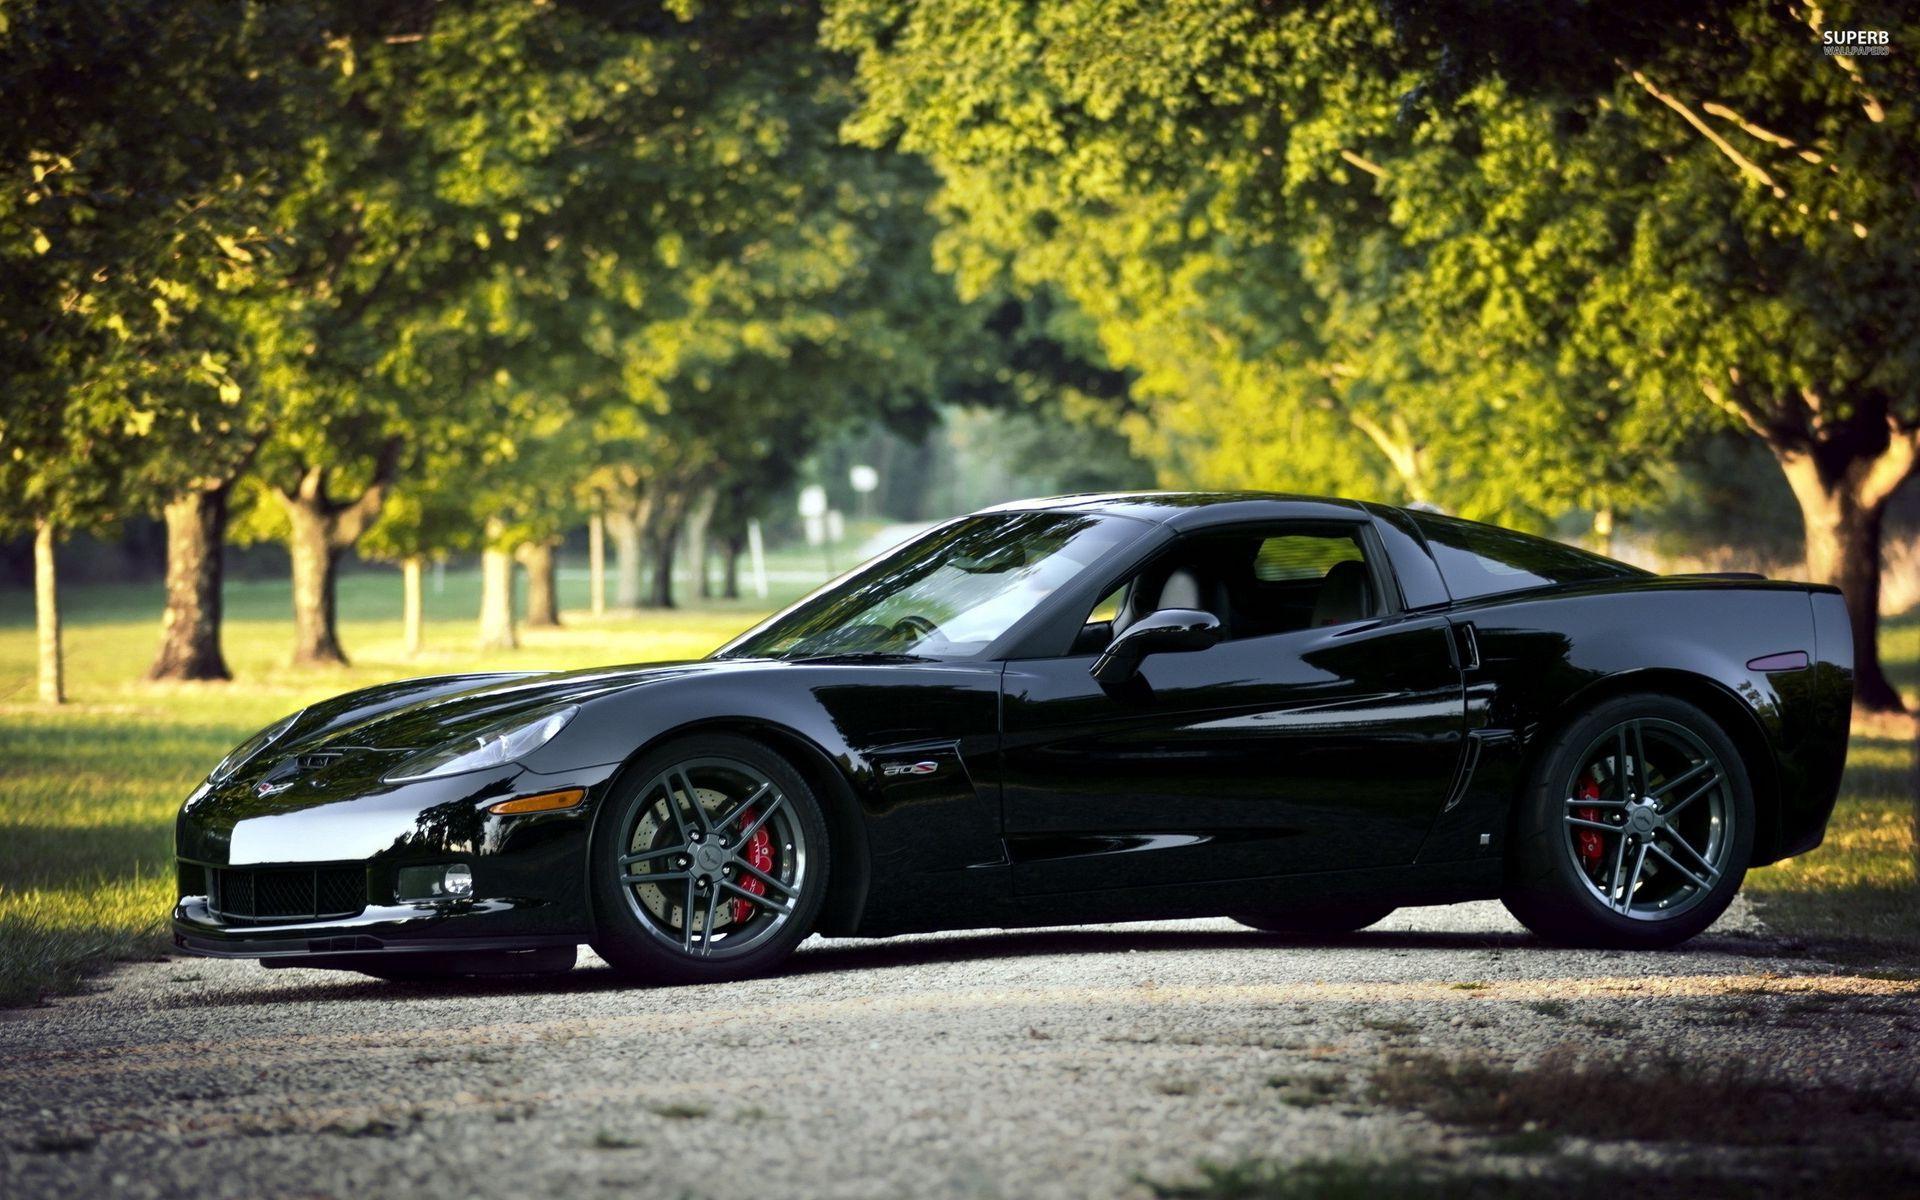 Black C5 Corvette Wallpapers - Top Free Black C5 Corvette Backgrounds